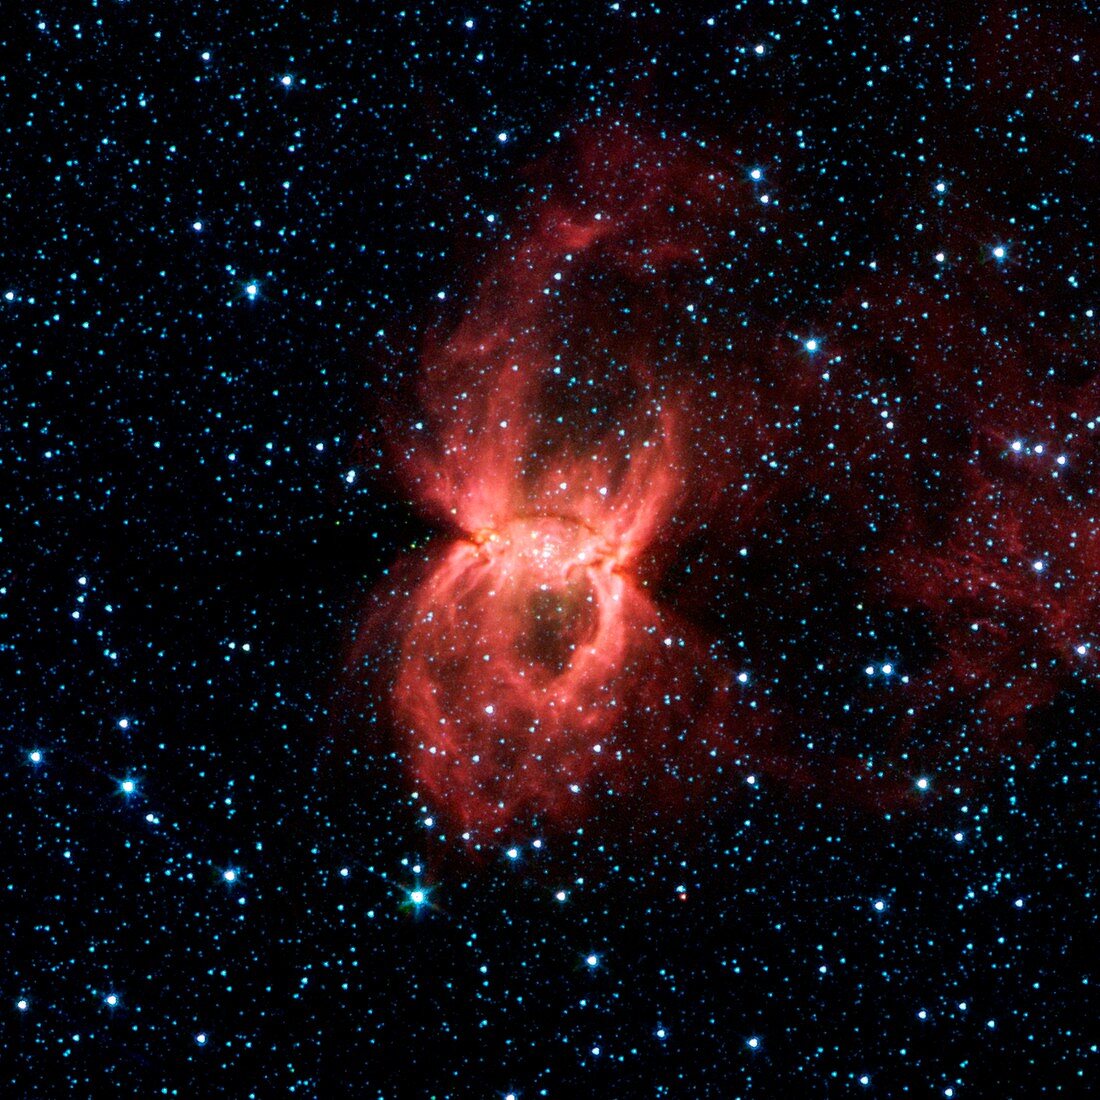 Black widow nebula,infrared image